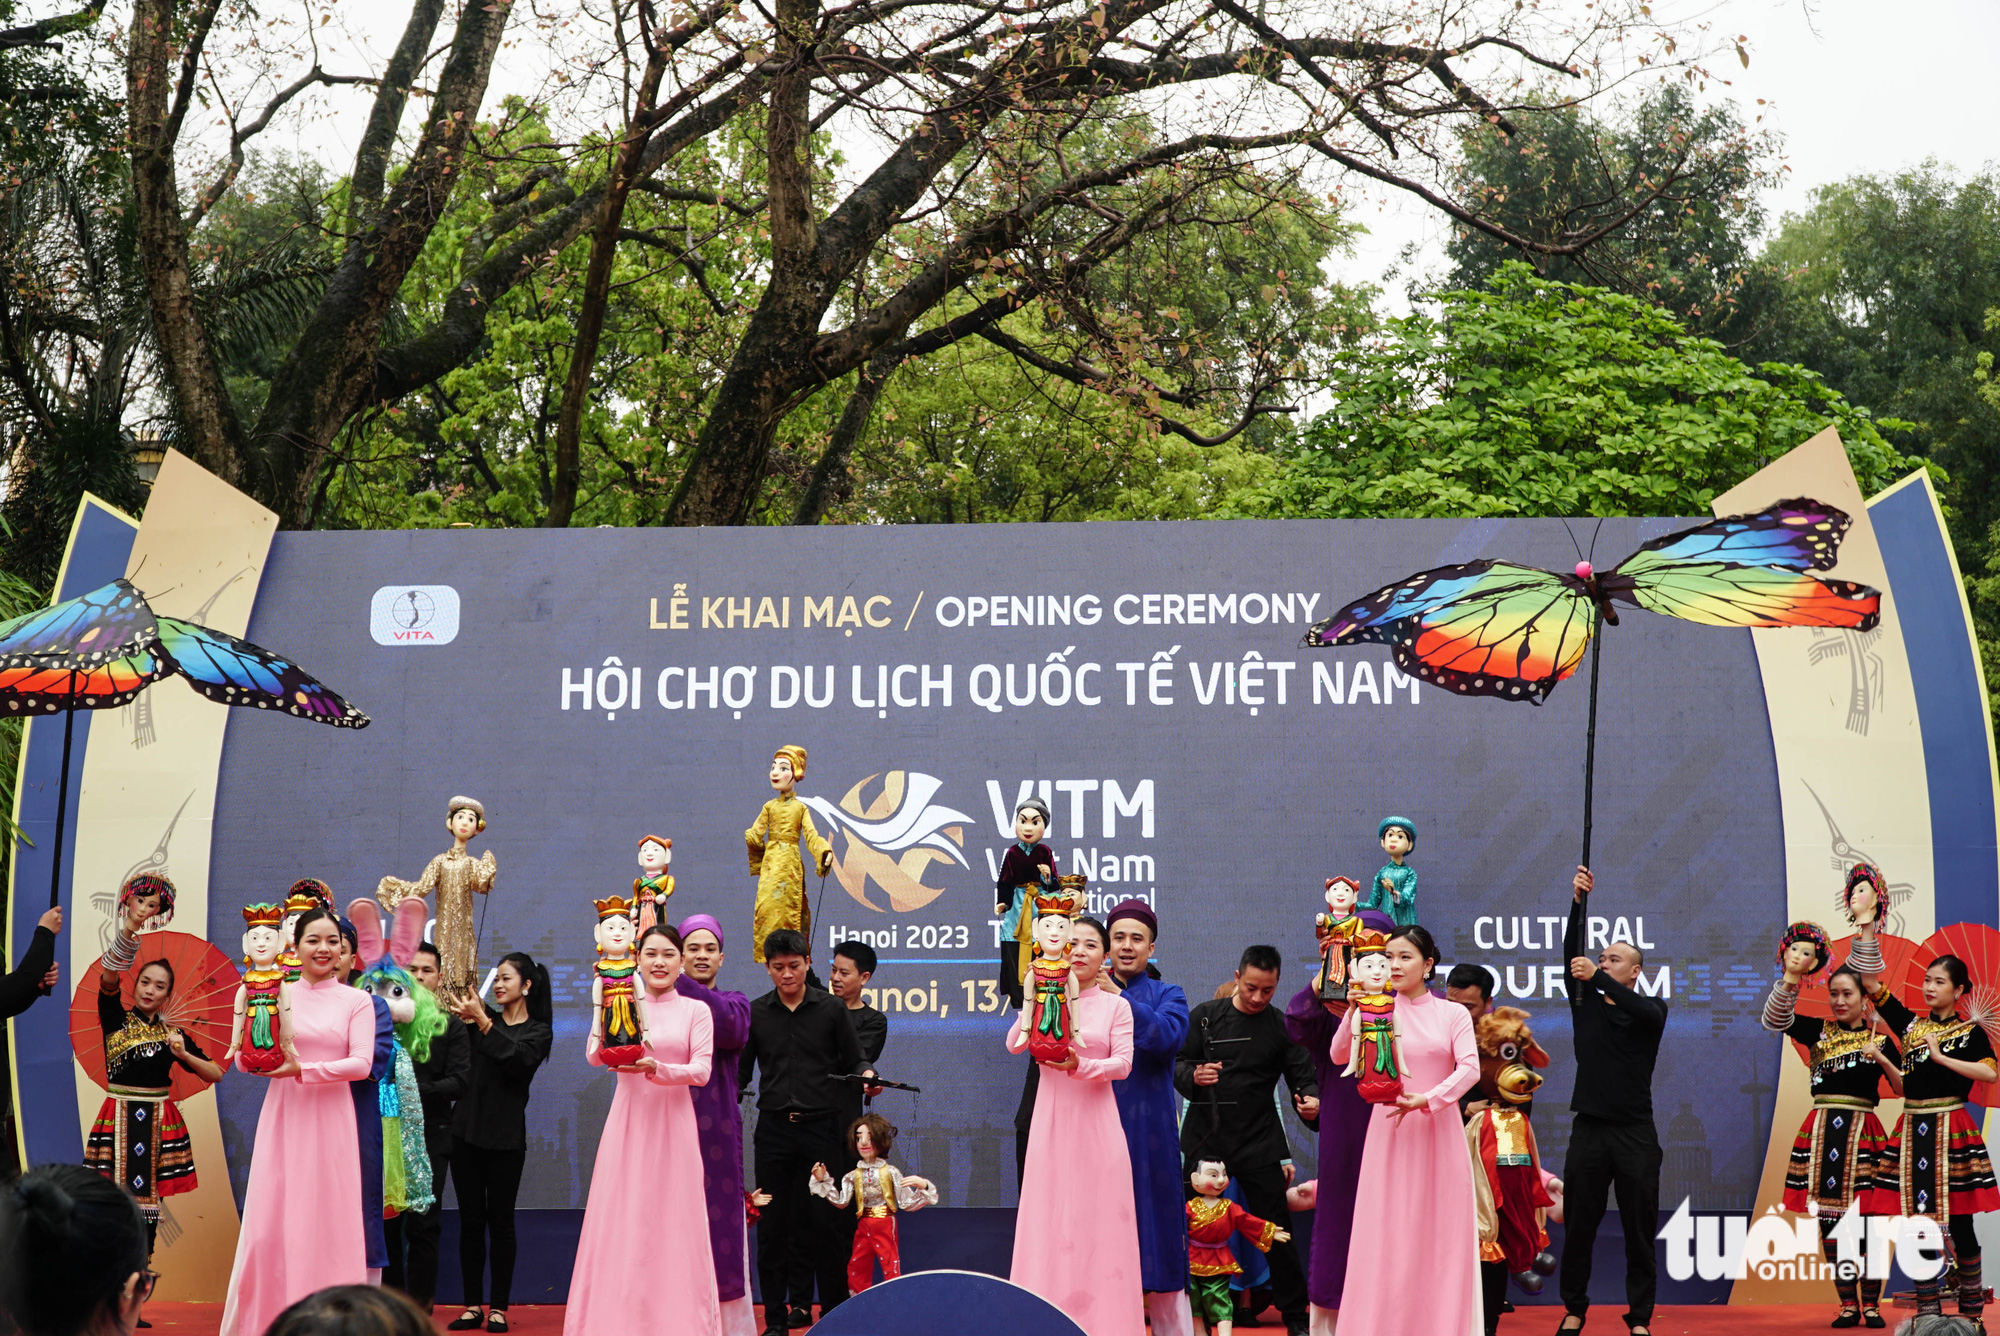 Hanoi travel expo spotlights cultural diversity